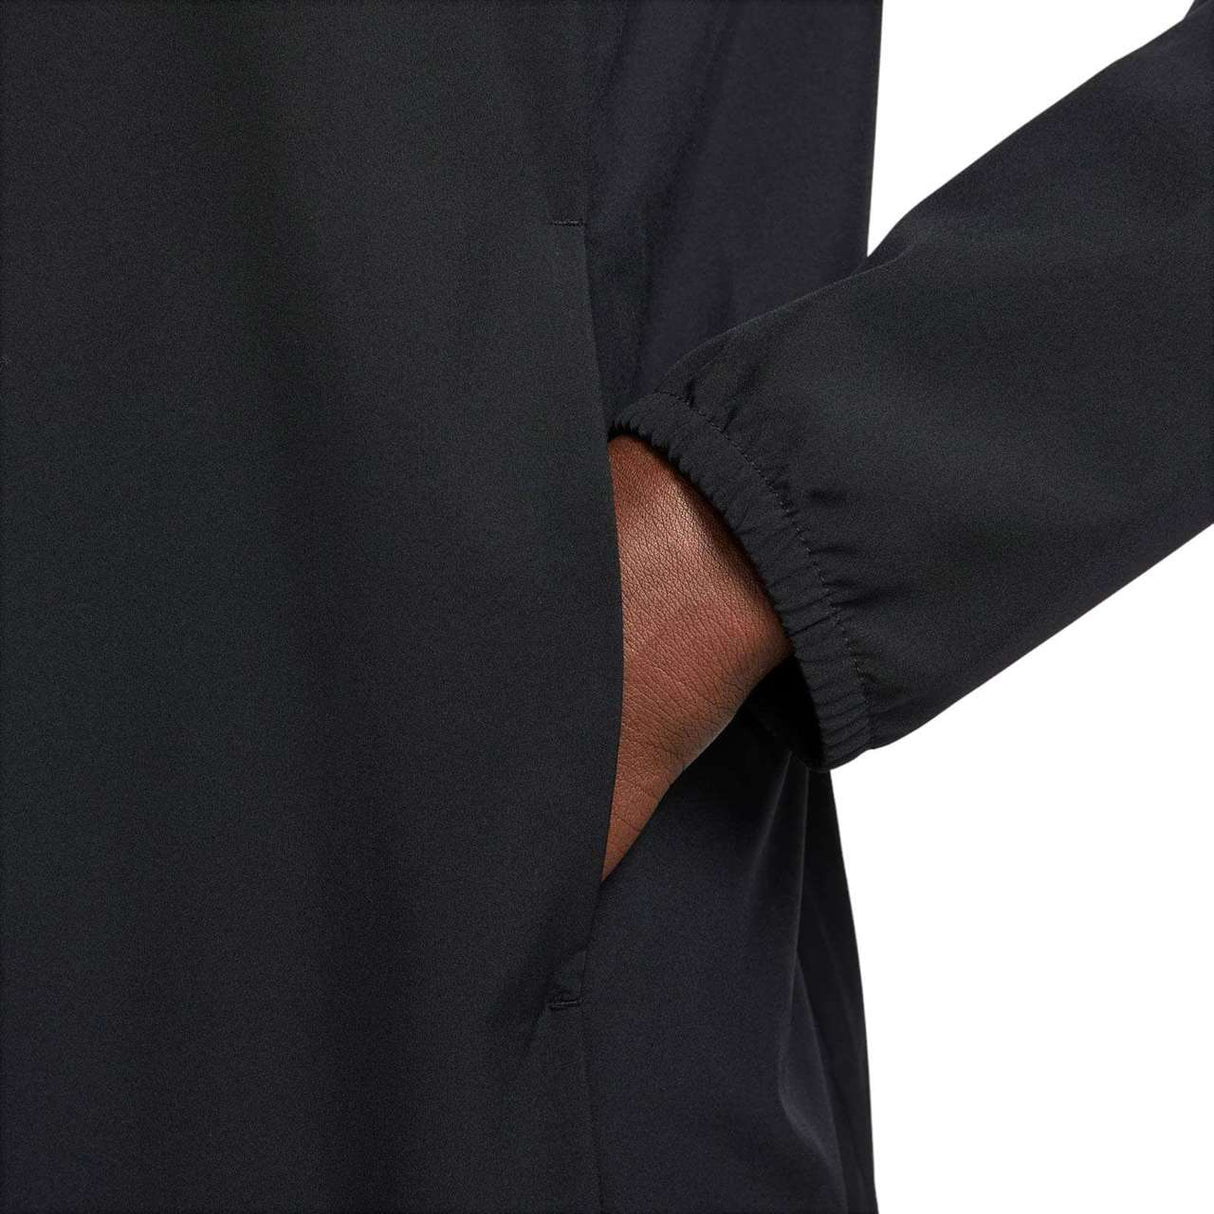 Nike Form Mens Dri-FIT Hooded Versatile Jacket